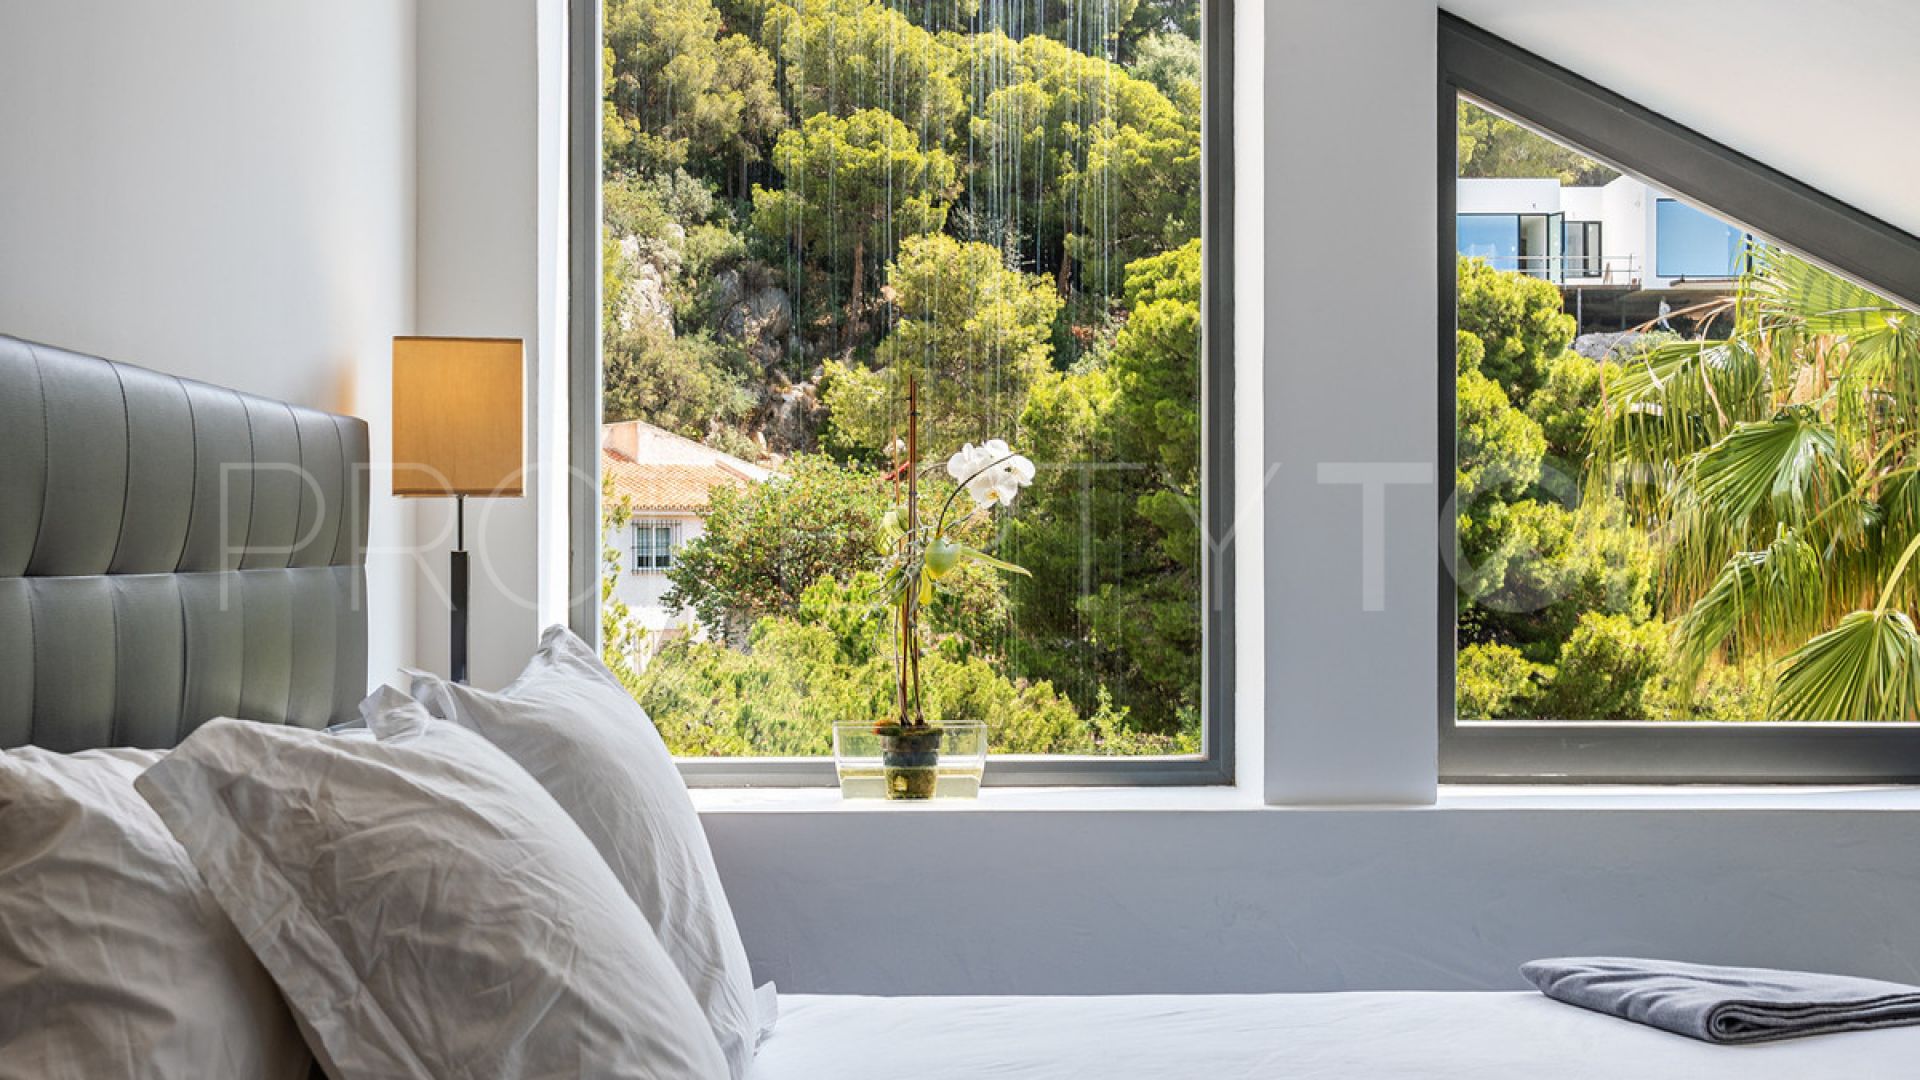 4 bedrooms Malaga - Este villa for sale